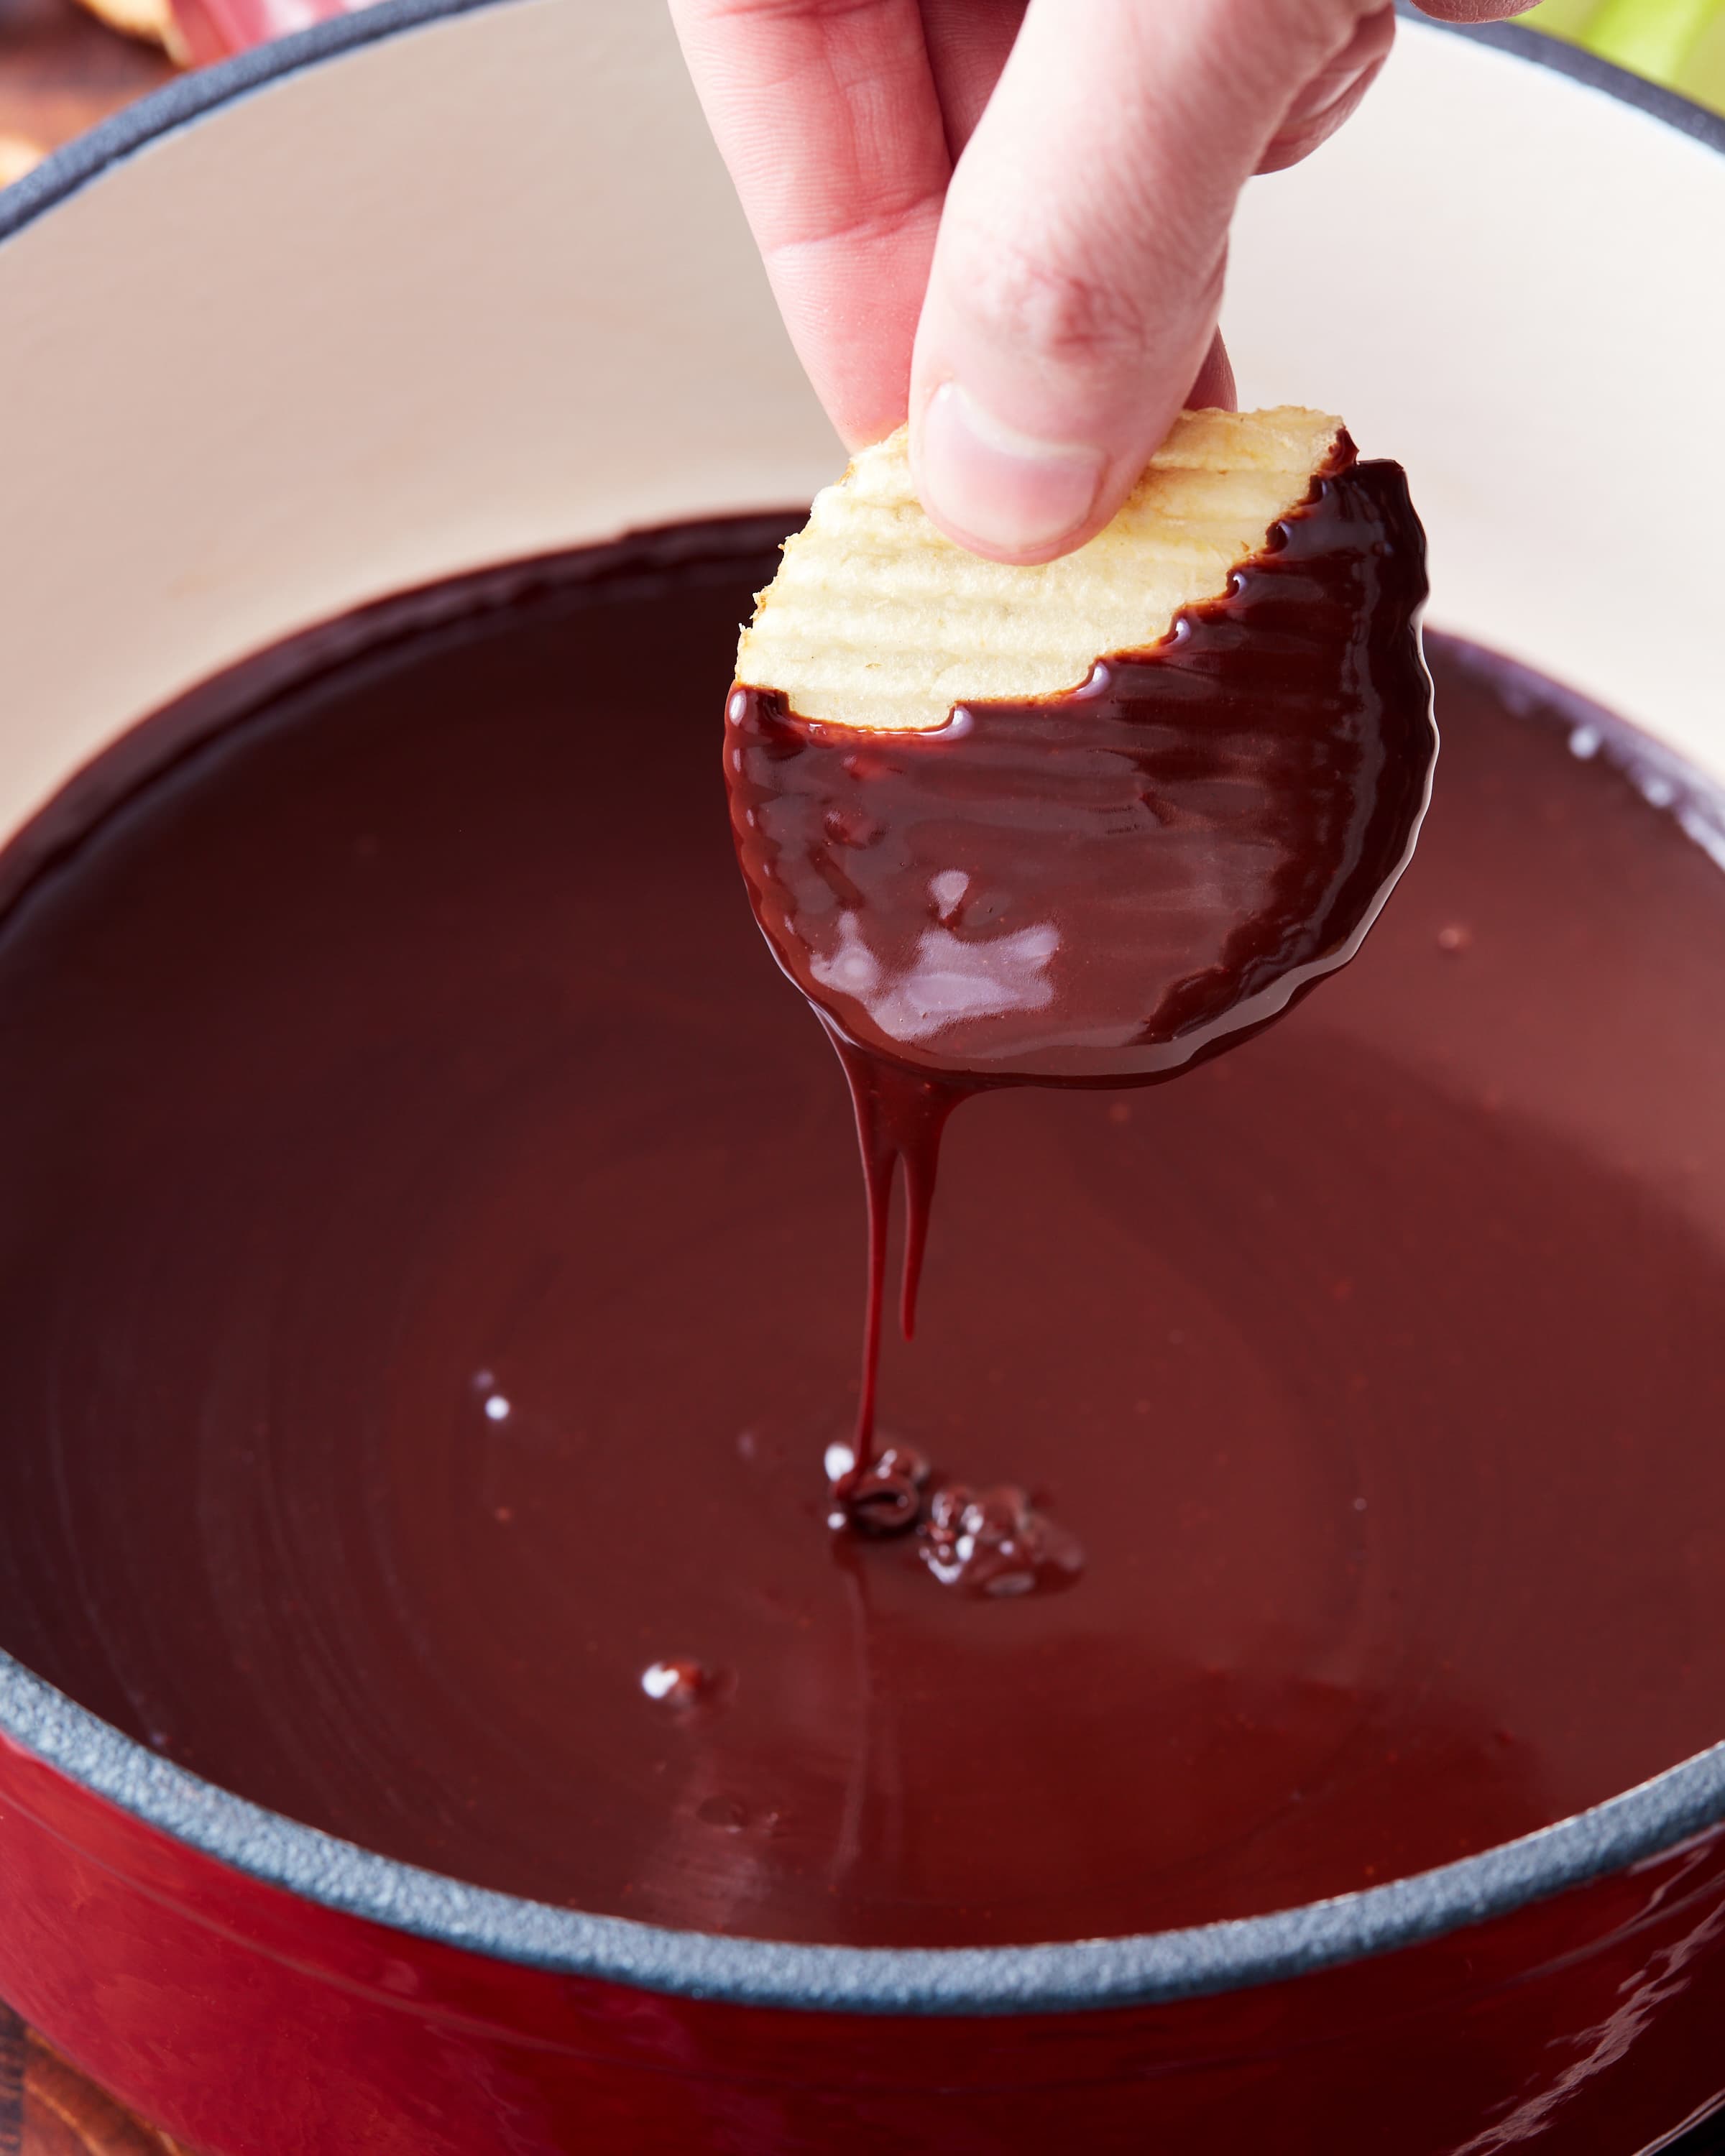 https://cdn.apartmenttherapy.info/image/upload/v1612804948/k/Photo/Recipes/2021-02-how-to-chocolate-fondue/2021_howto_chocolatefondue_lead2_390_v1.jpg